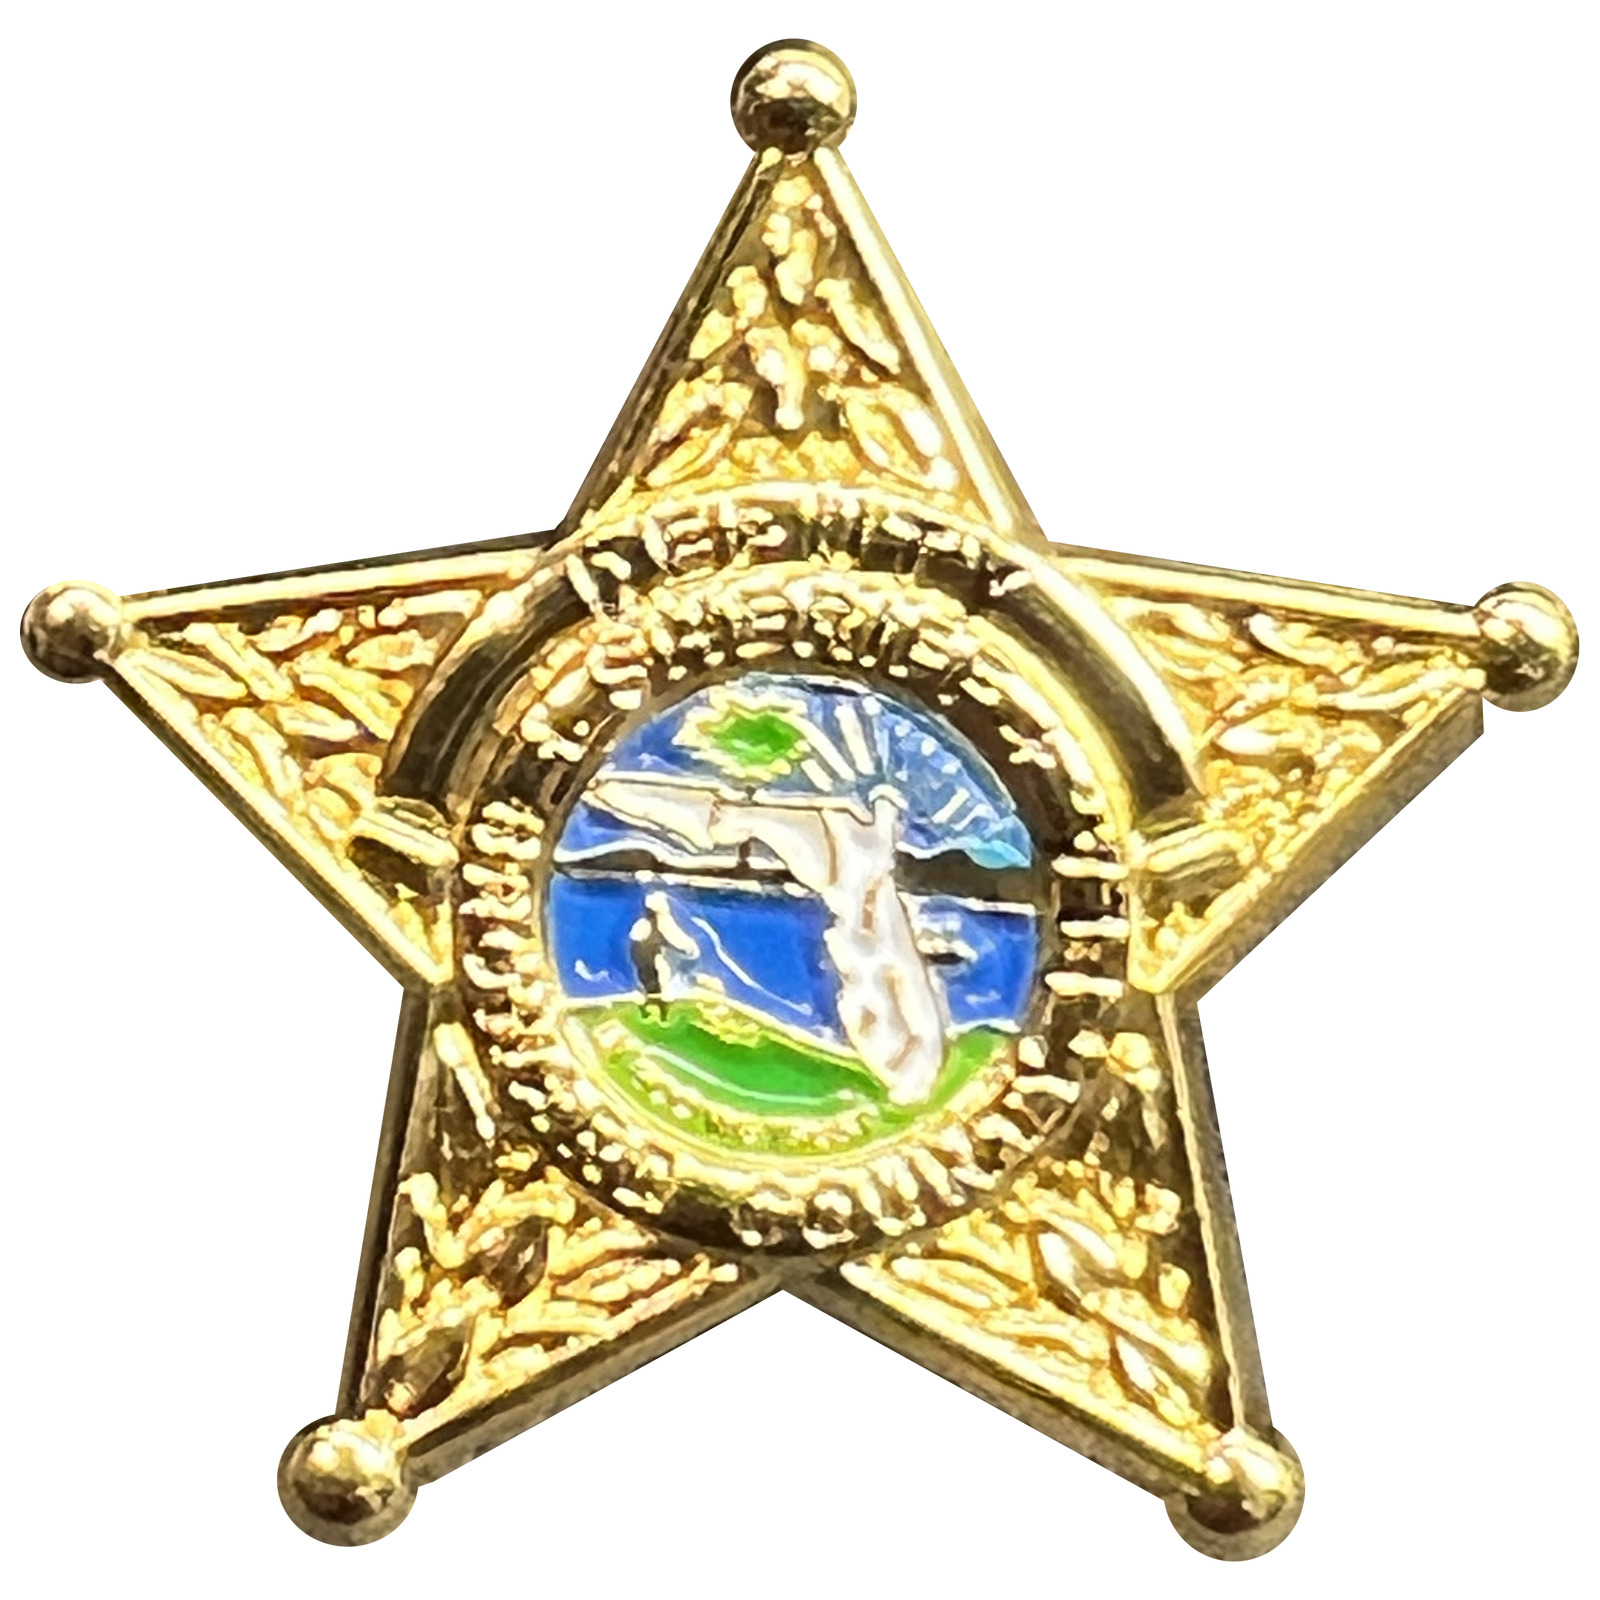 PBX-009-B BSO Deputy Sheriff Broward Sheriff's Office Police Lapel Pin Broward C